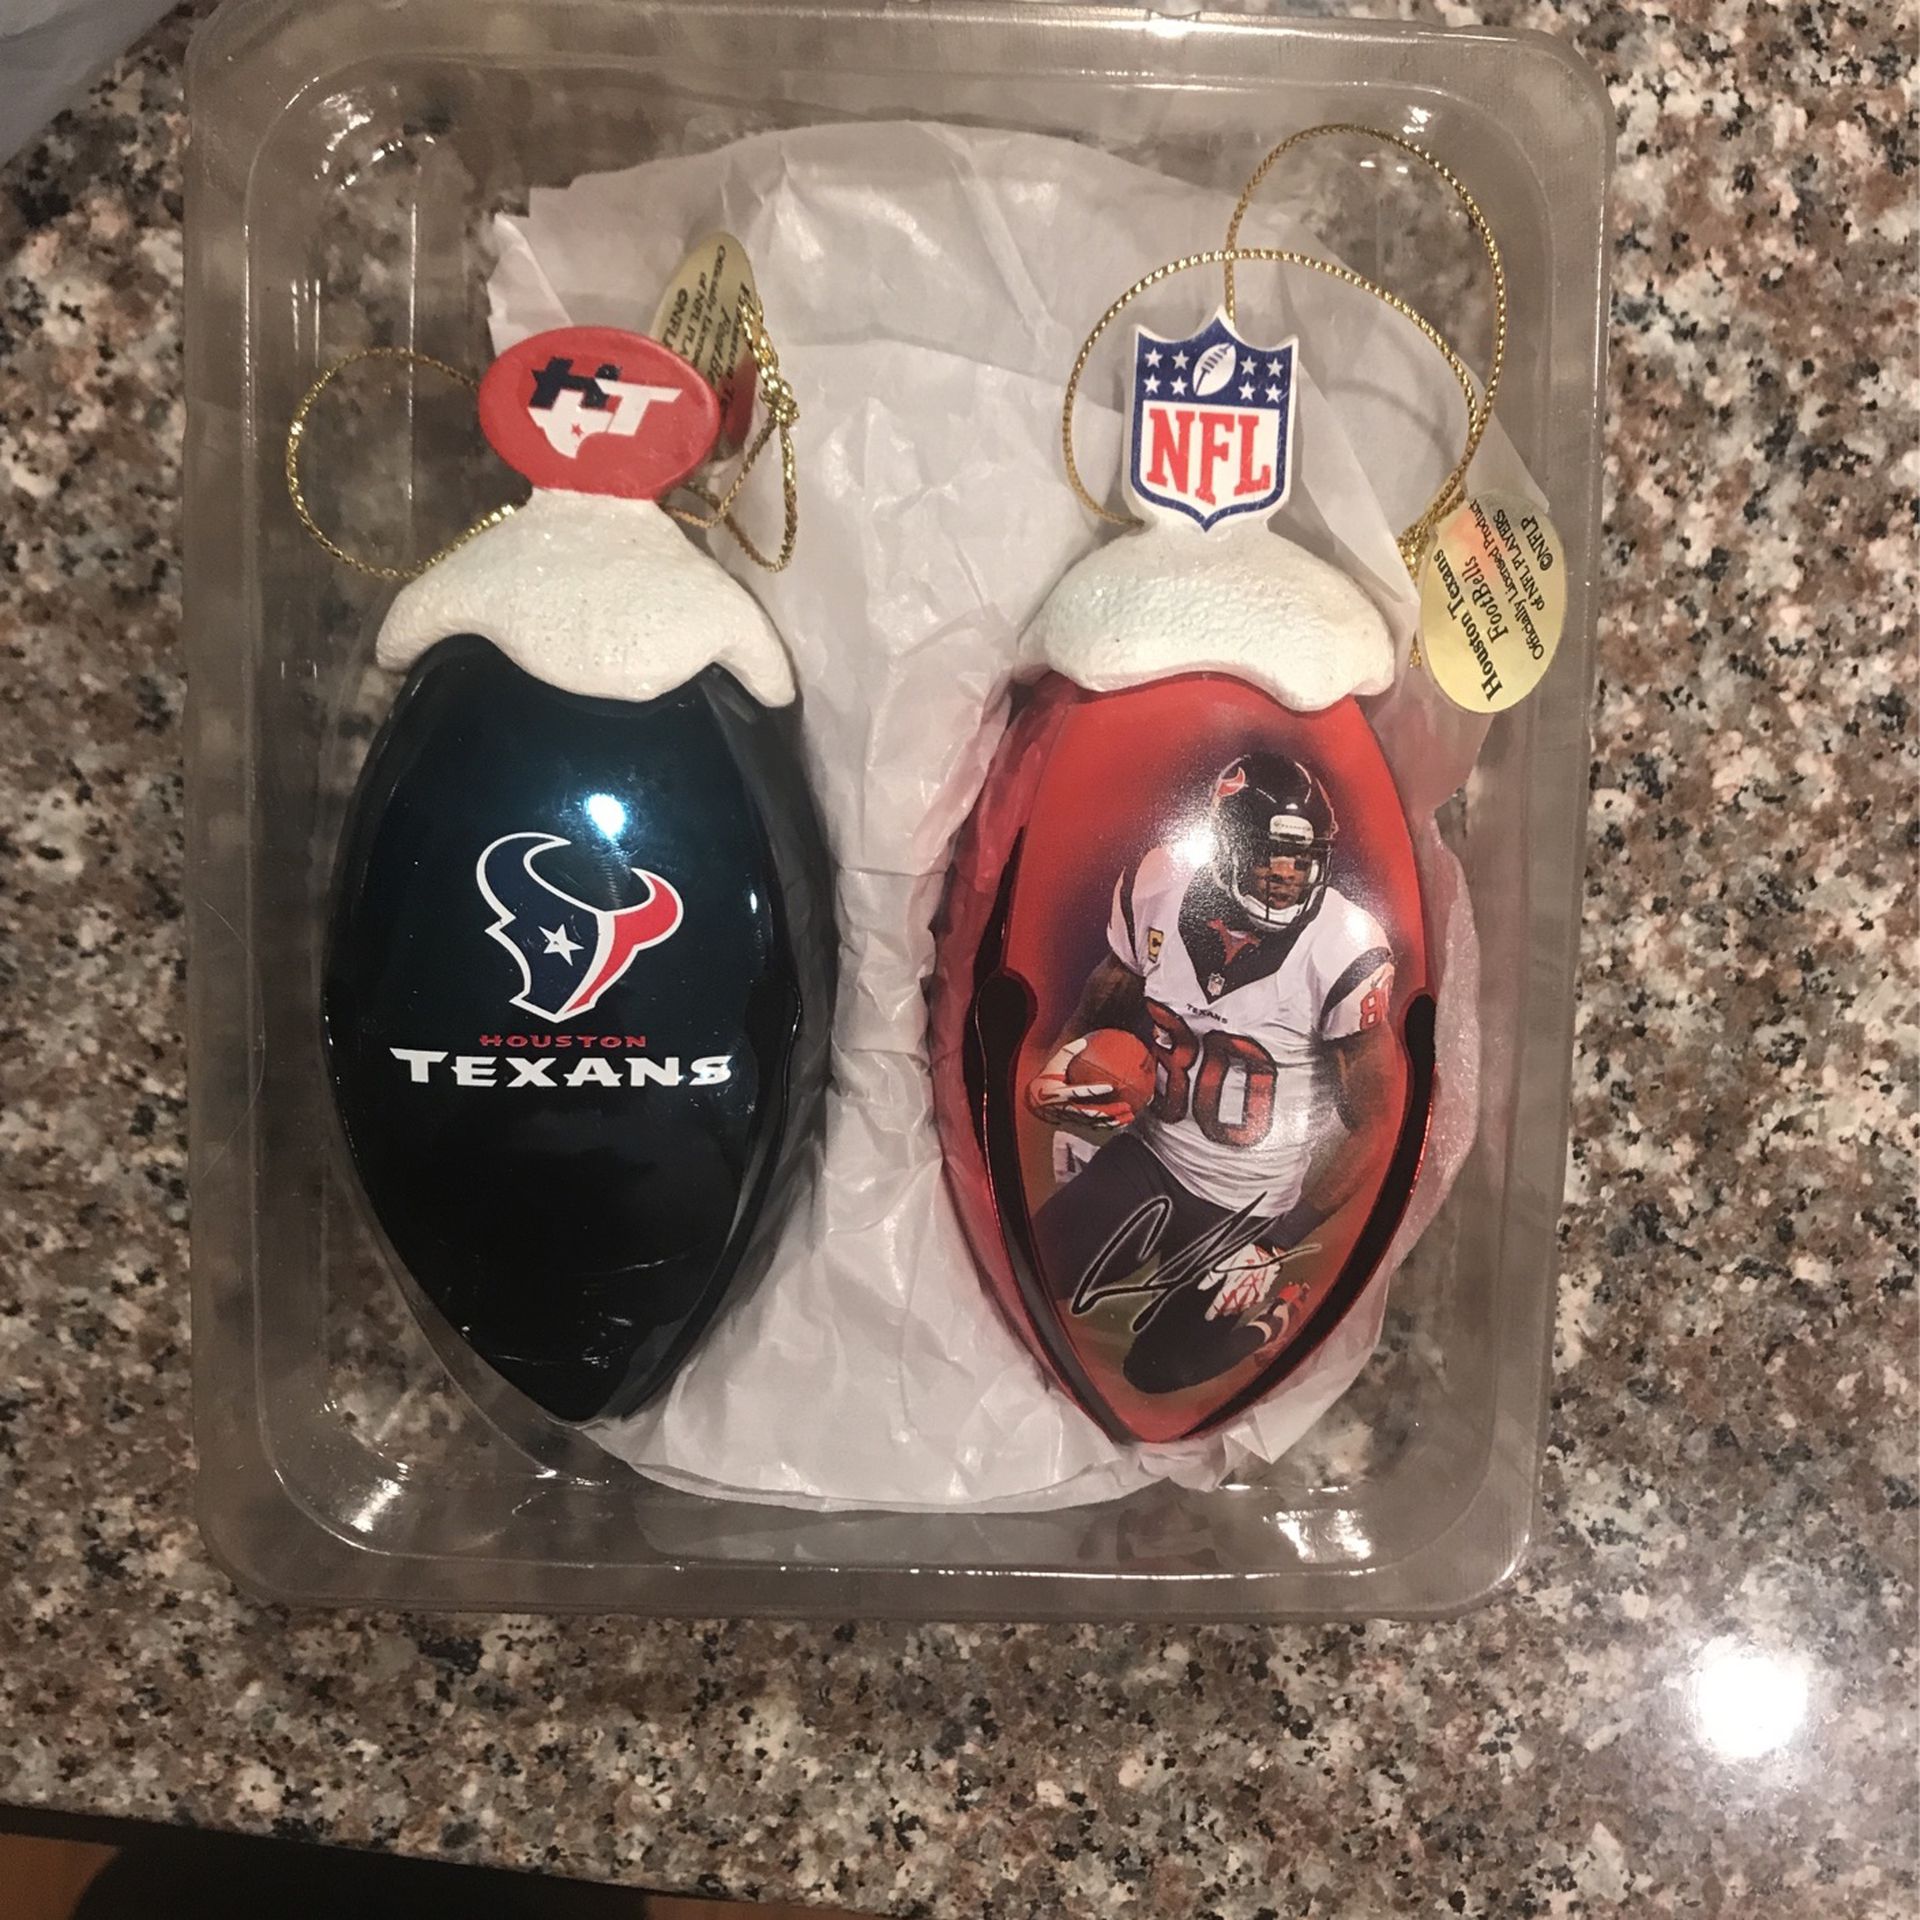 Brandon Exchange Official NFL Houston Texans Ornaments